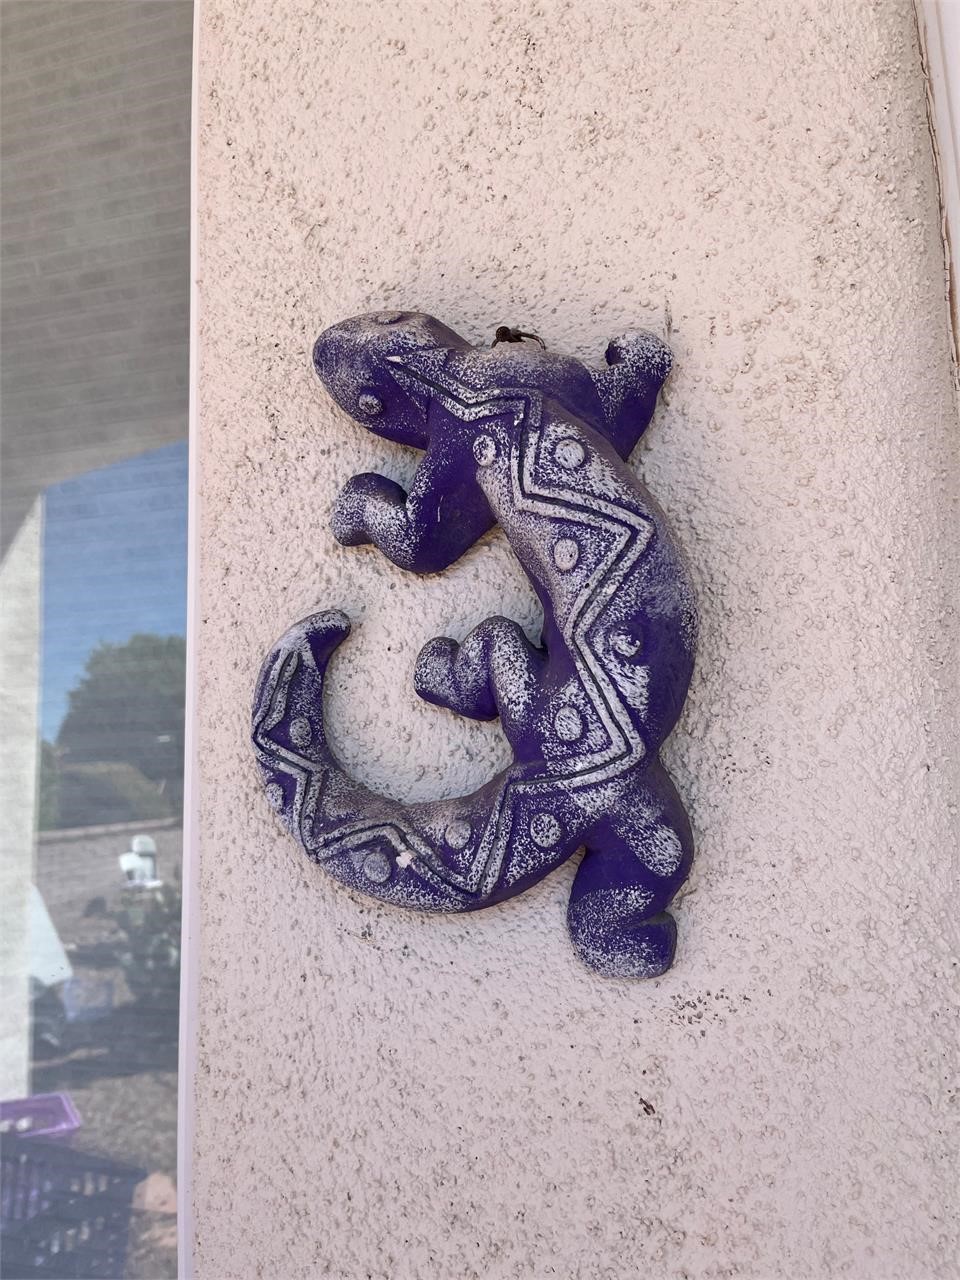 Purple Pottery Wall Hanging Lizard